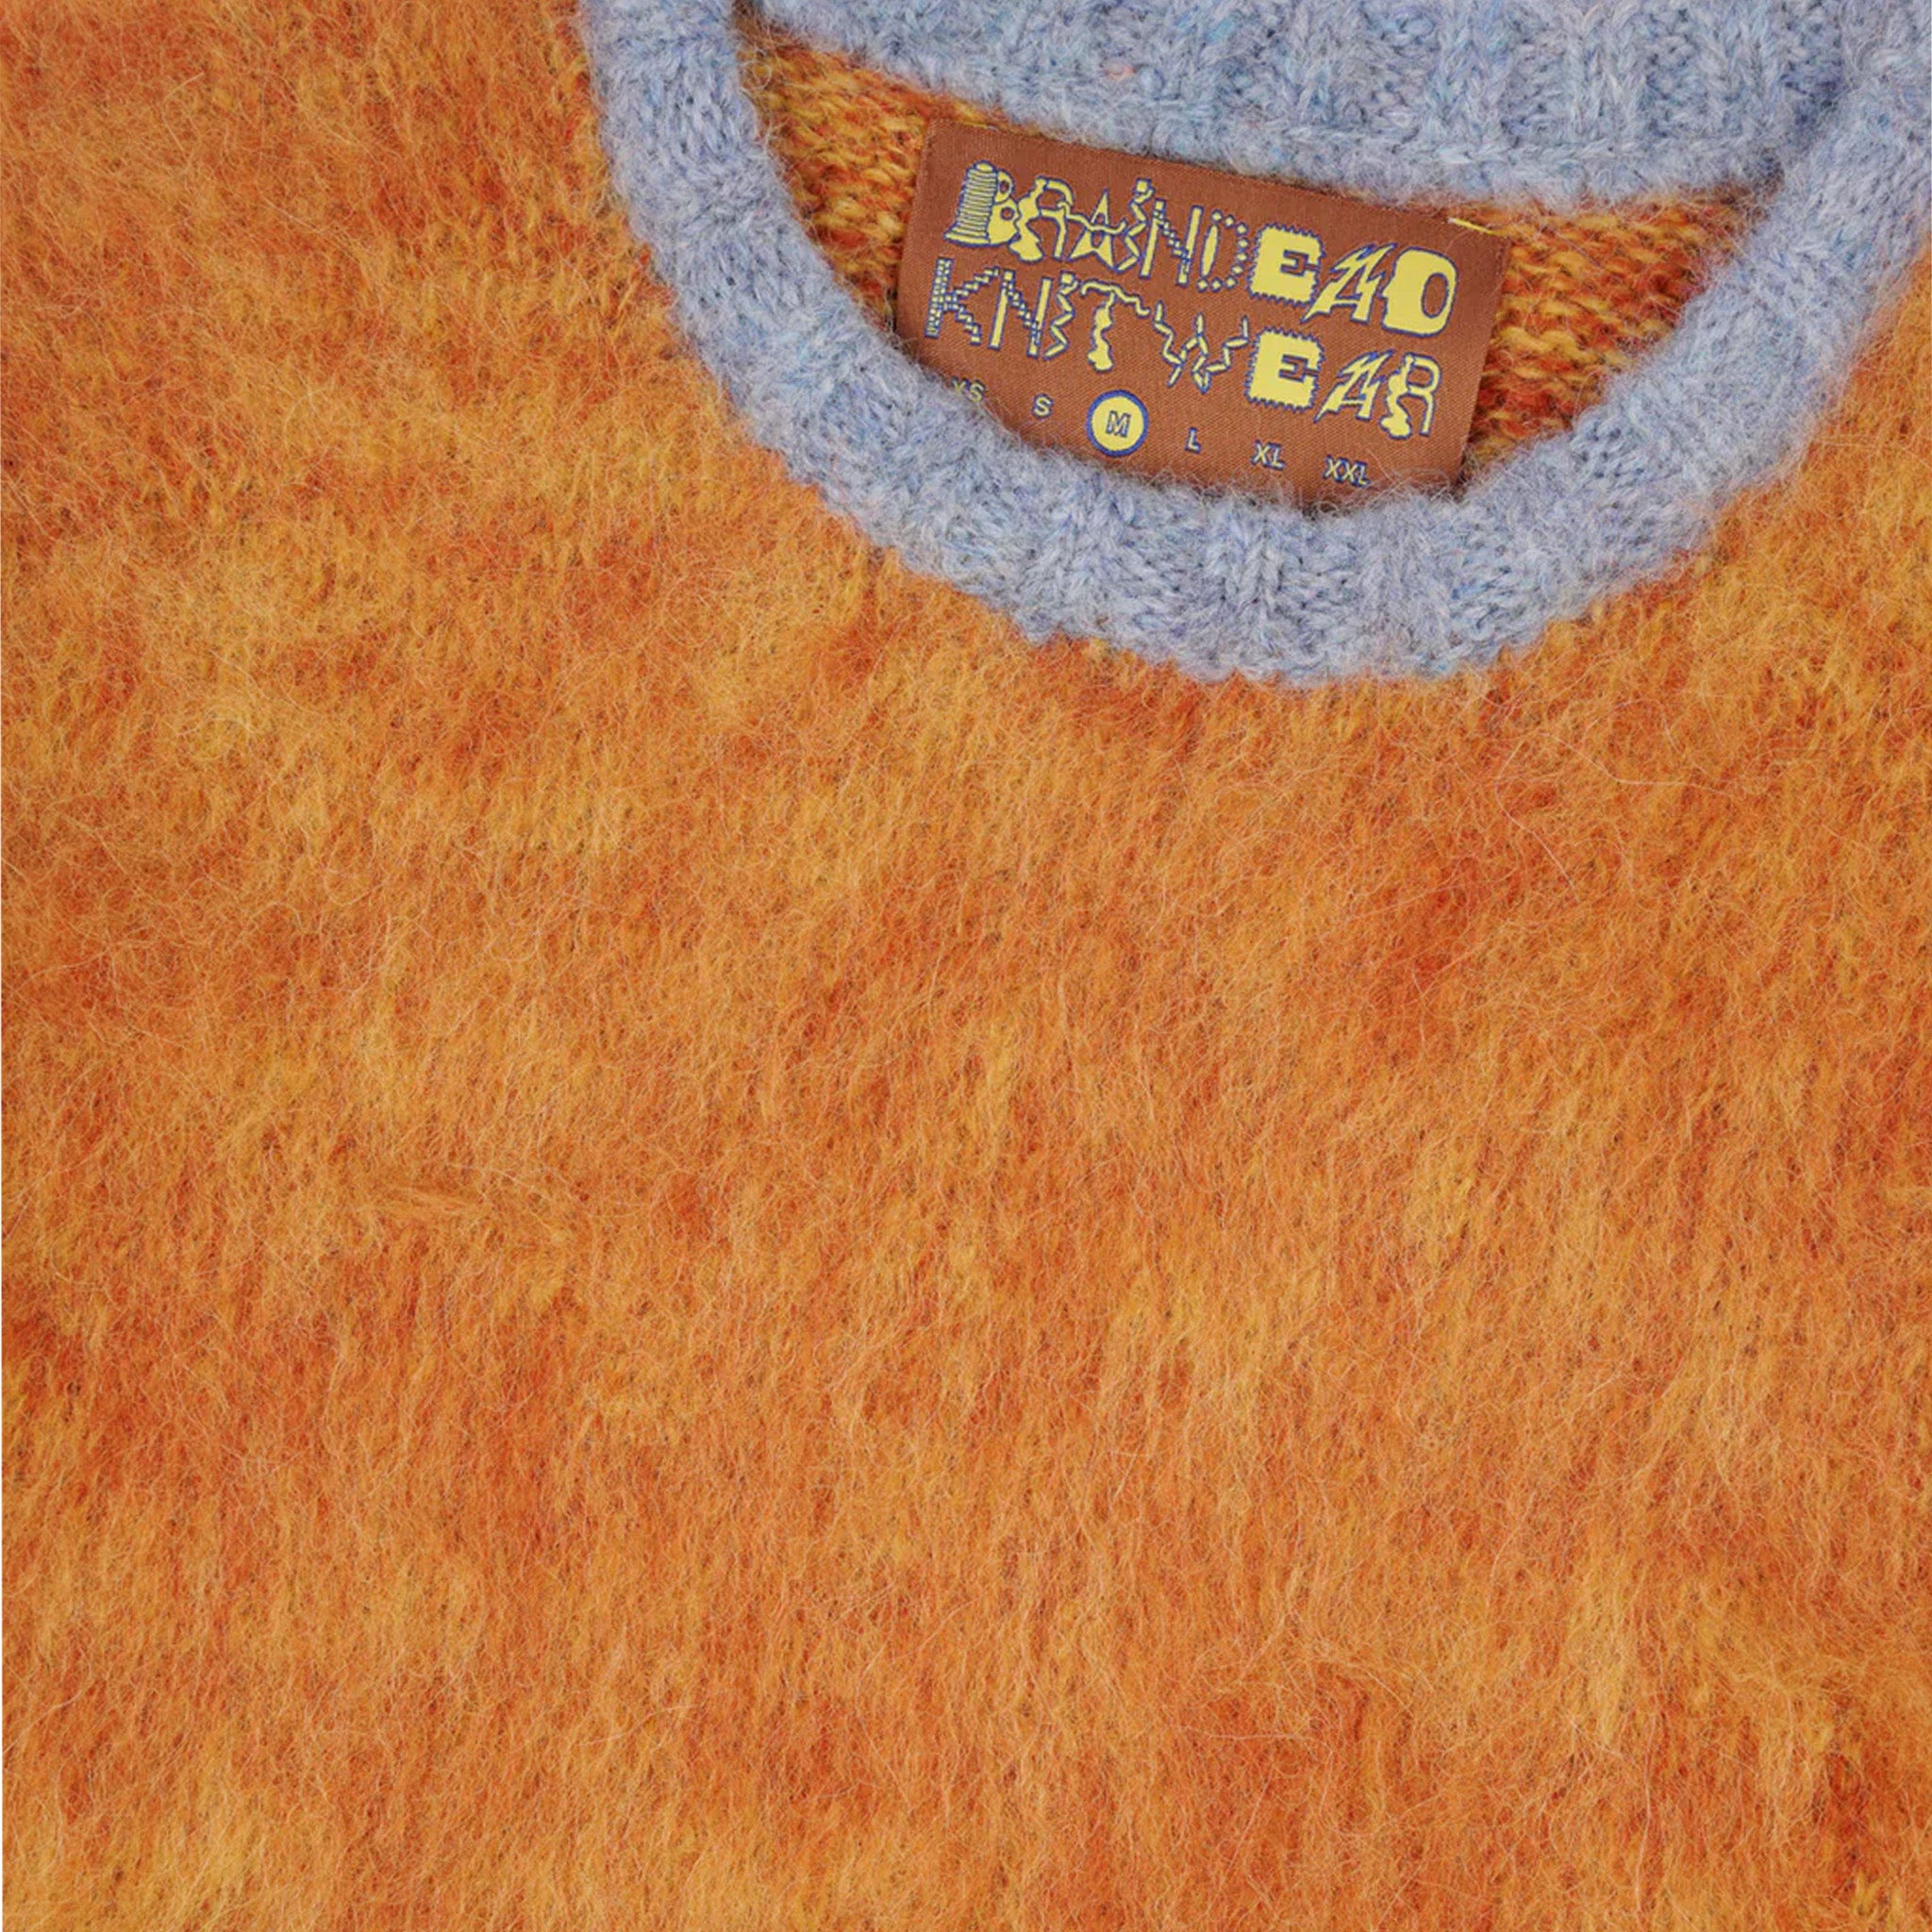 Brain Dead Marled Alpaca Crewneck Sweater (Orange) - August Shop